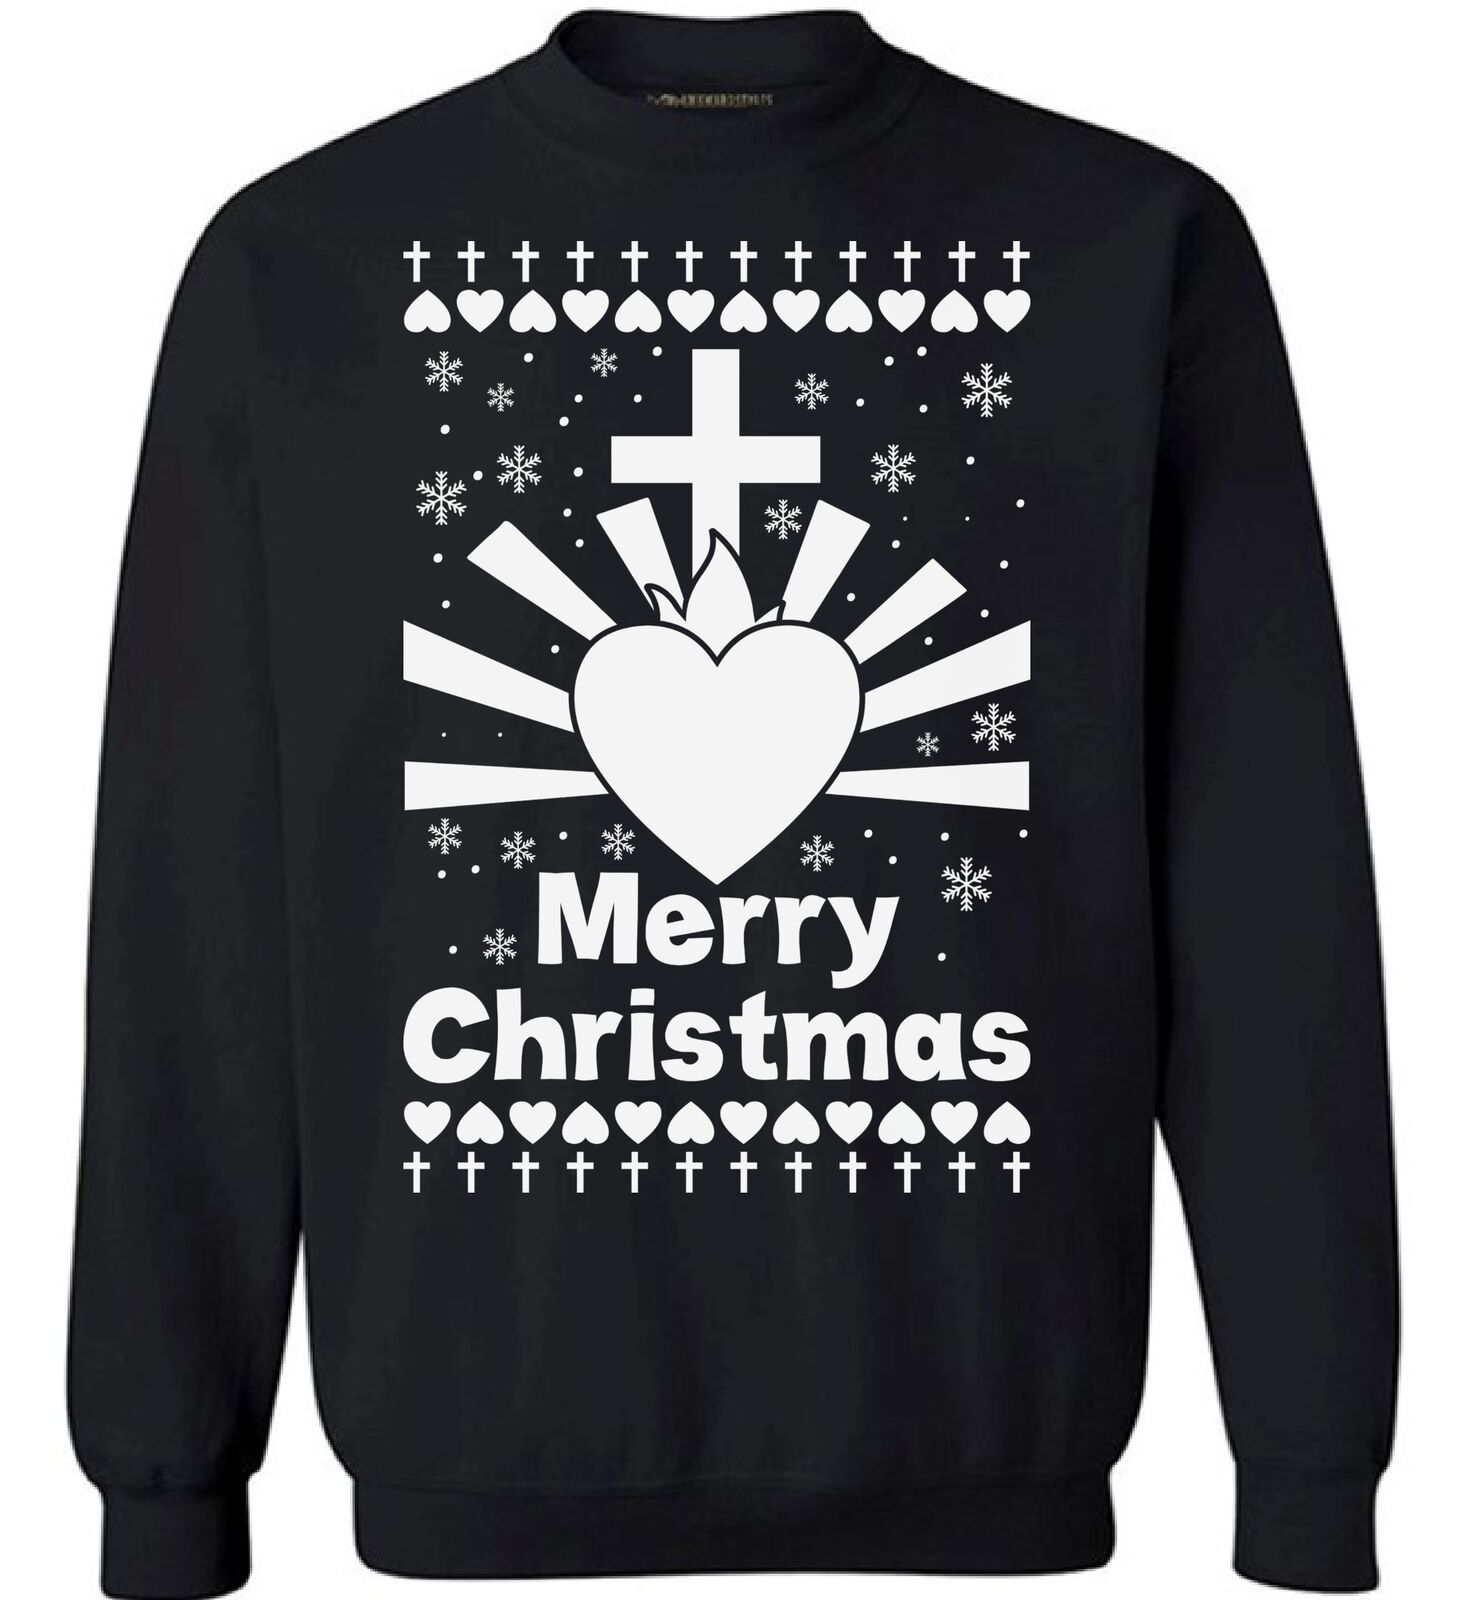 Merry Christmas Jesus Love Jesus With All My Heart Sweatshirt Style: Sweatshirt, Color: Black